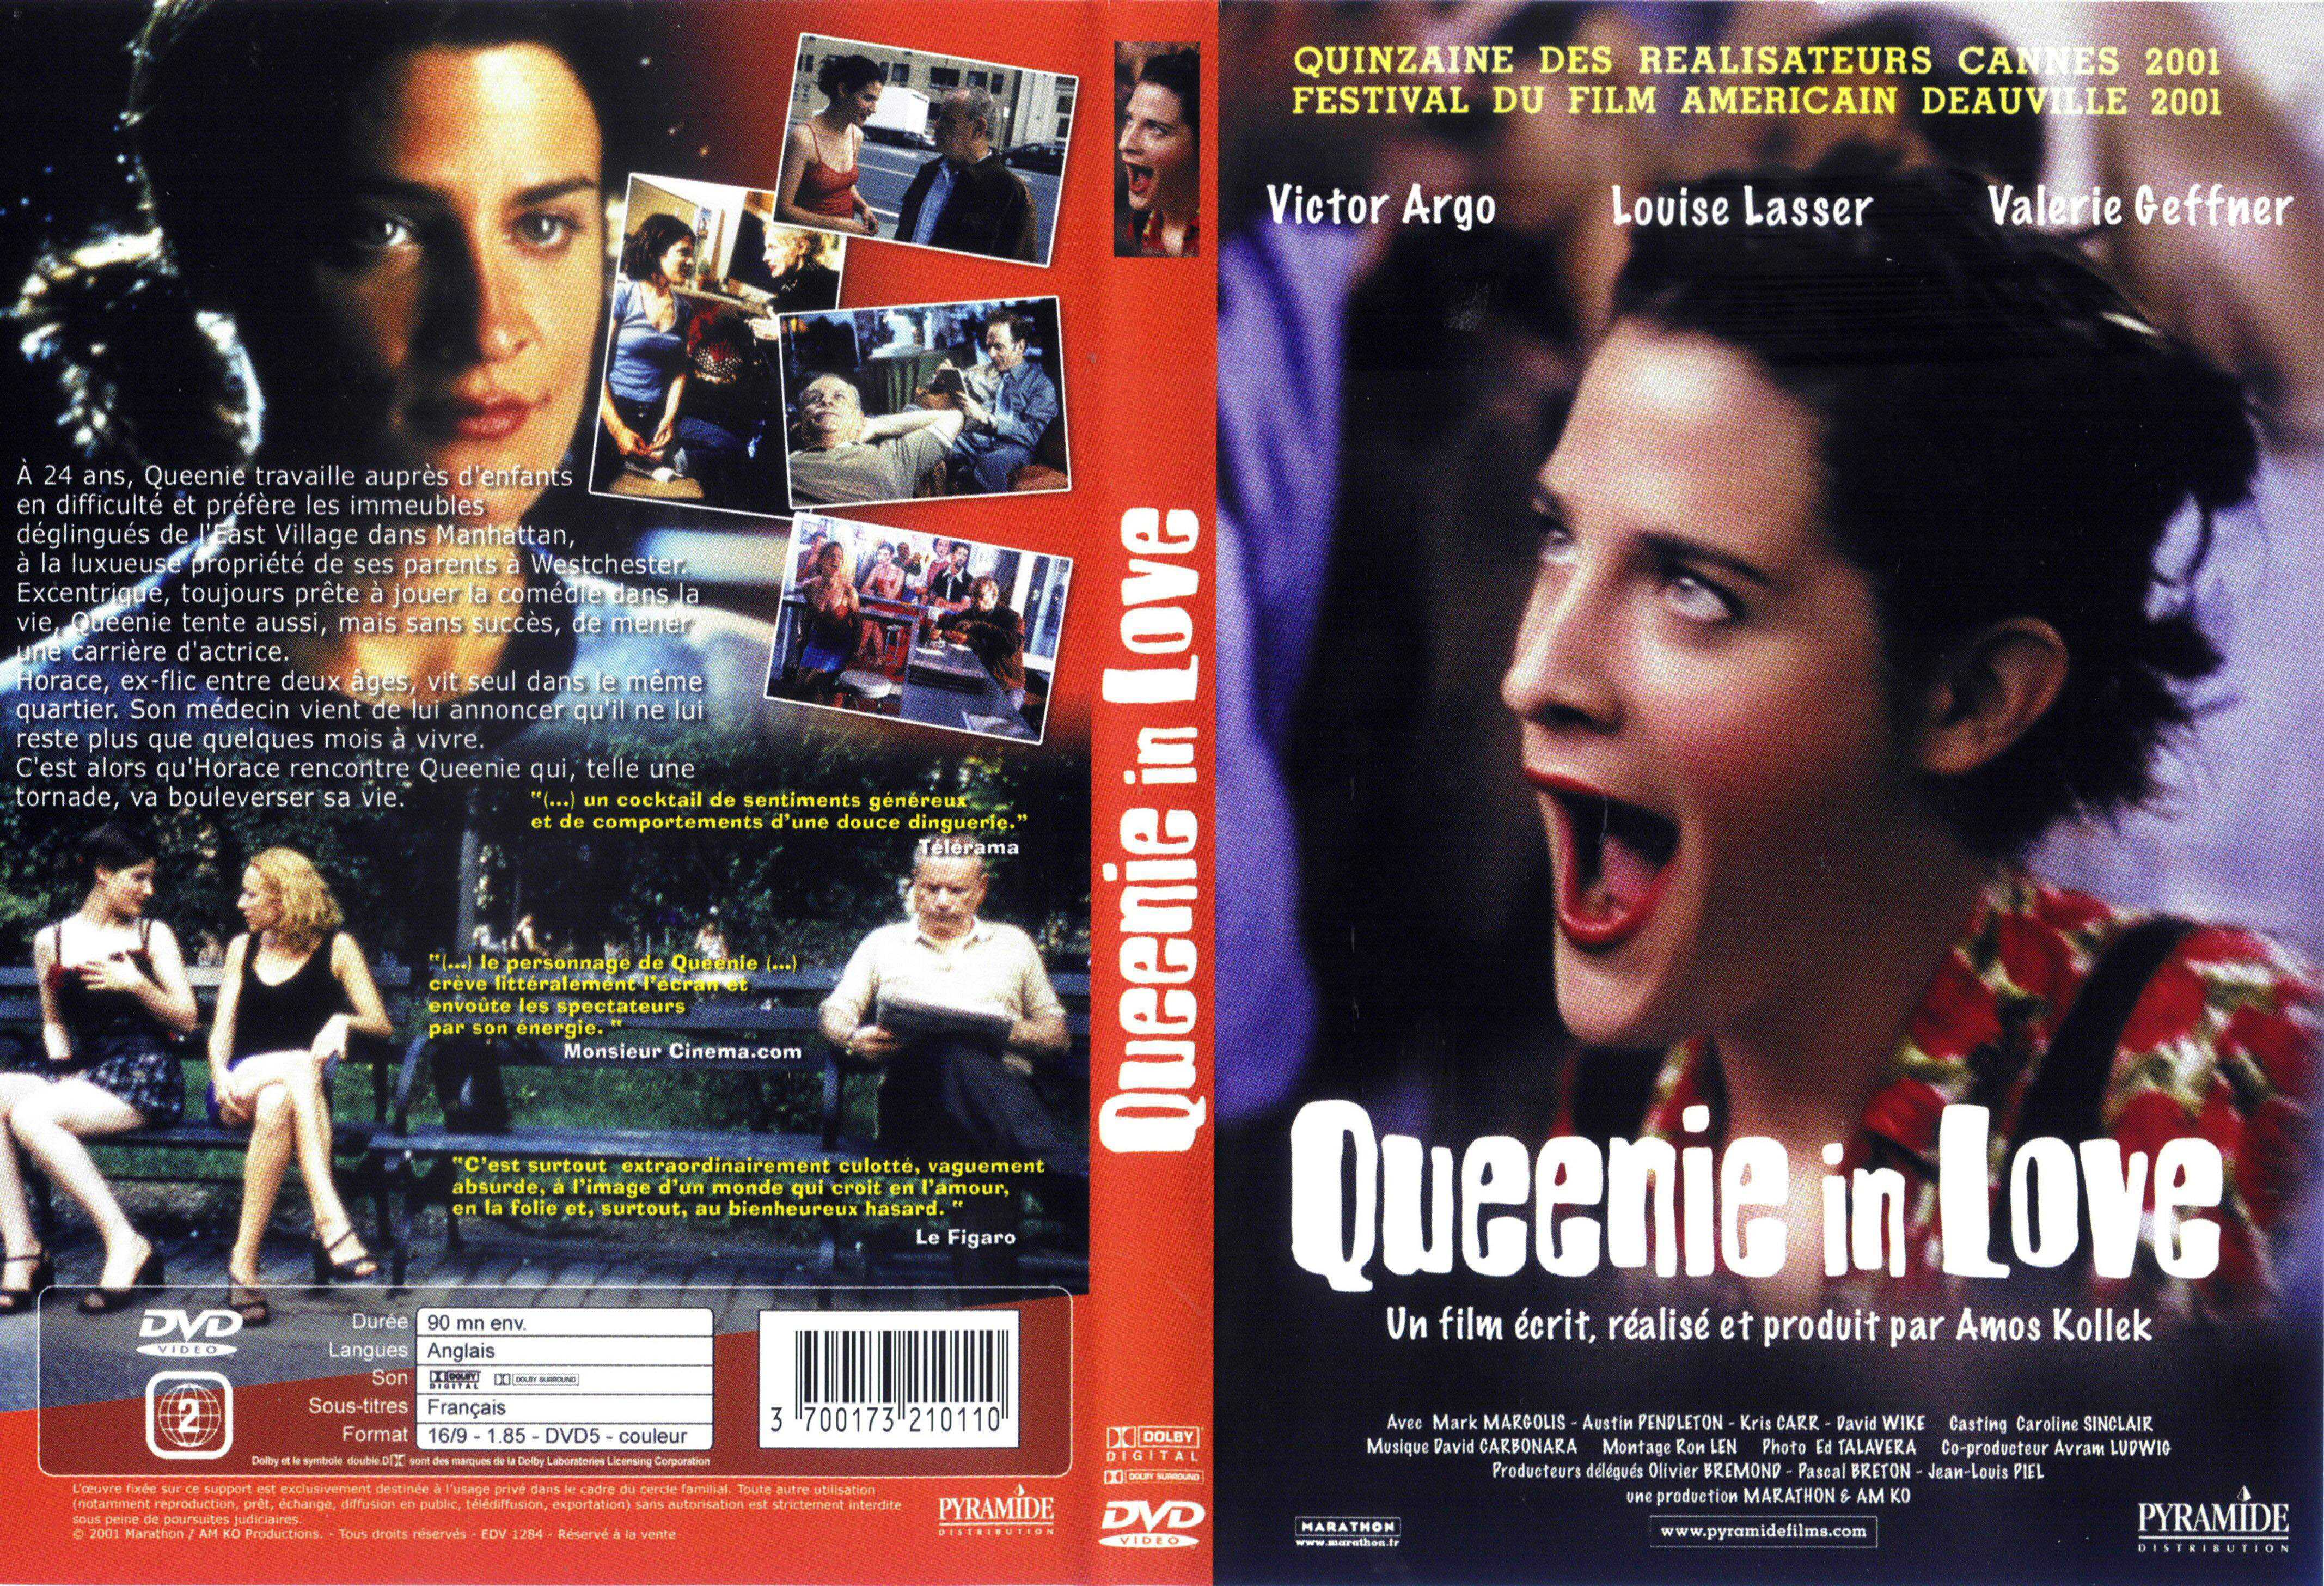 Jaquette DVD Queenie in love